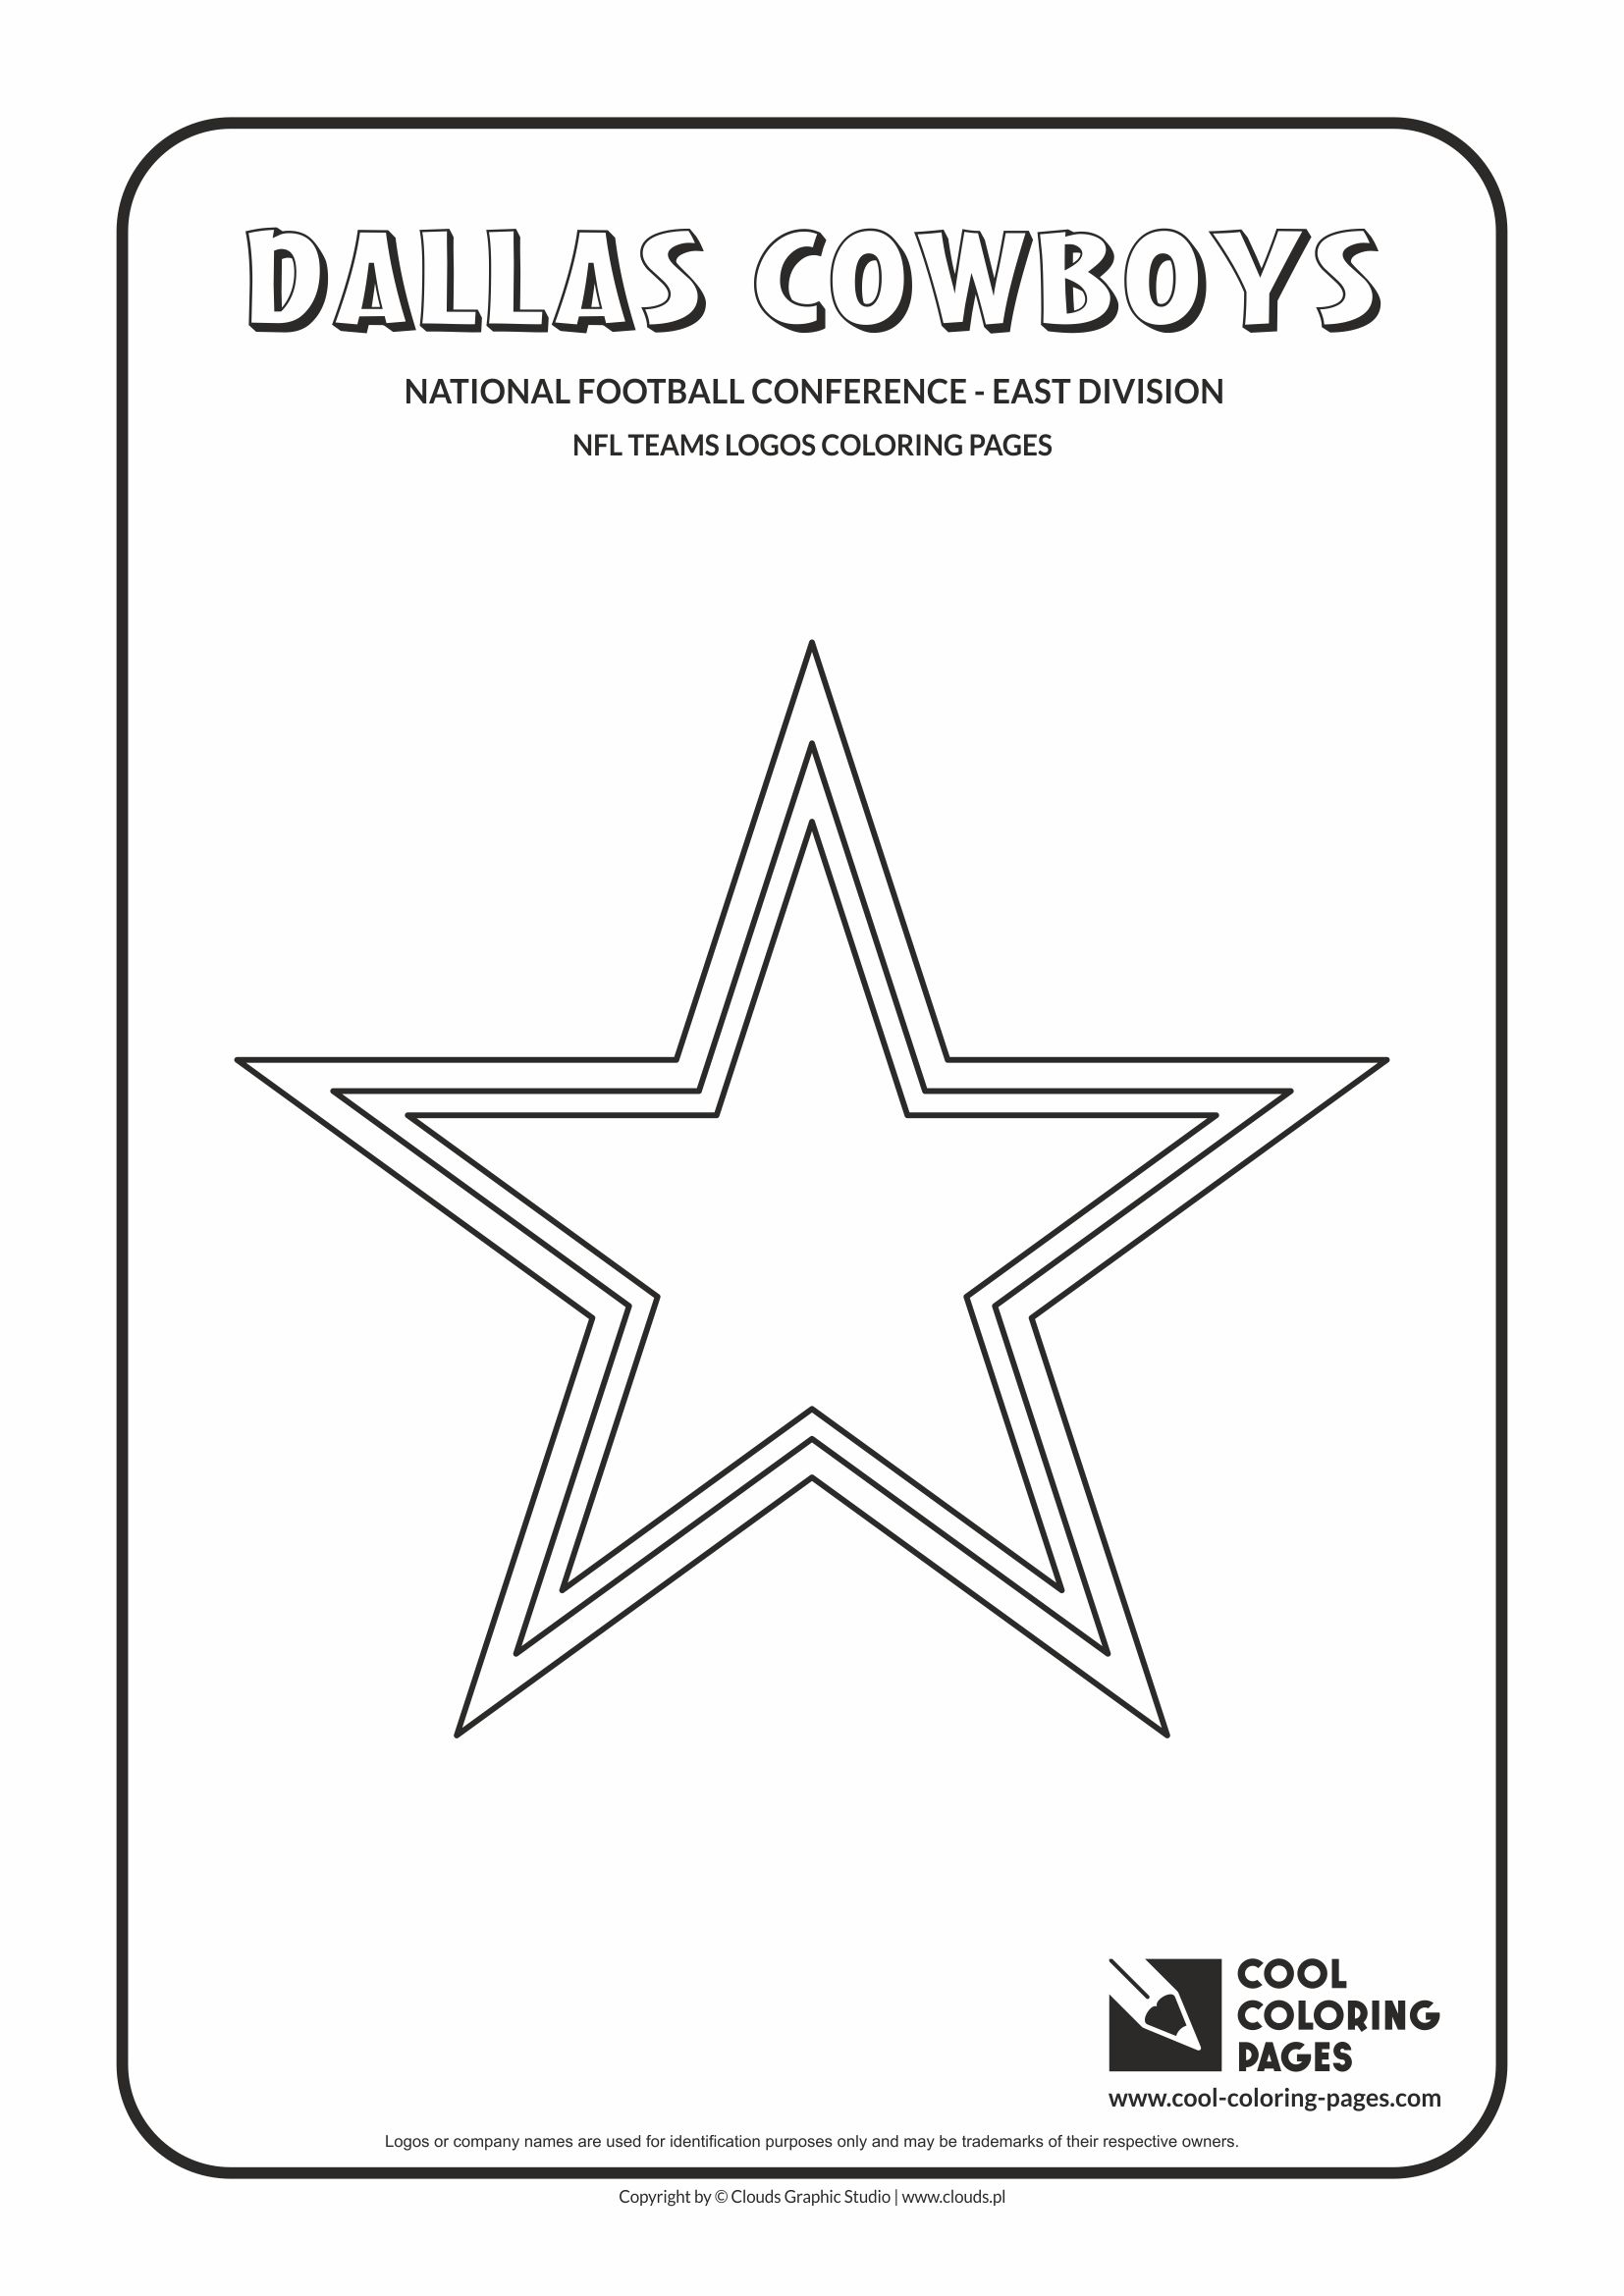 Cool Coloring Pages Dallas Cowboys - NFL American football teams logos